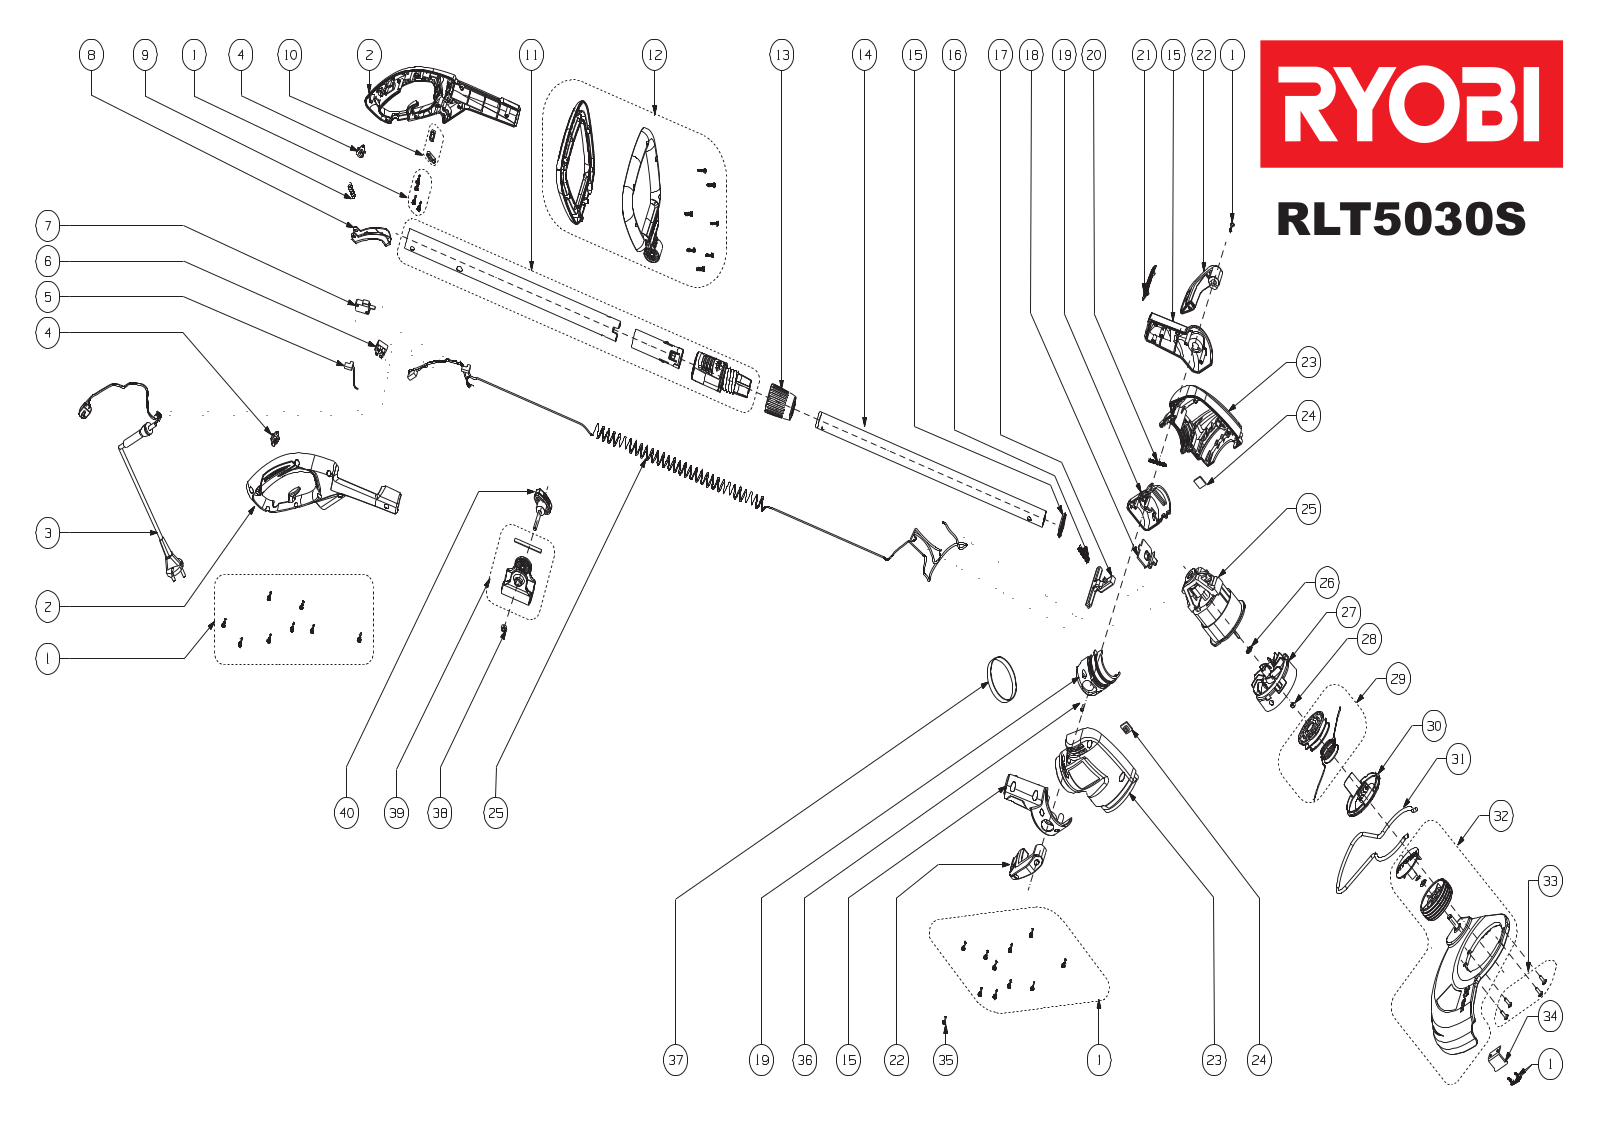 RYOBI RLT5030S User Manual